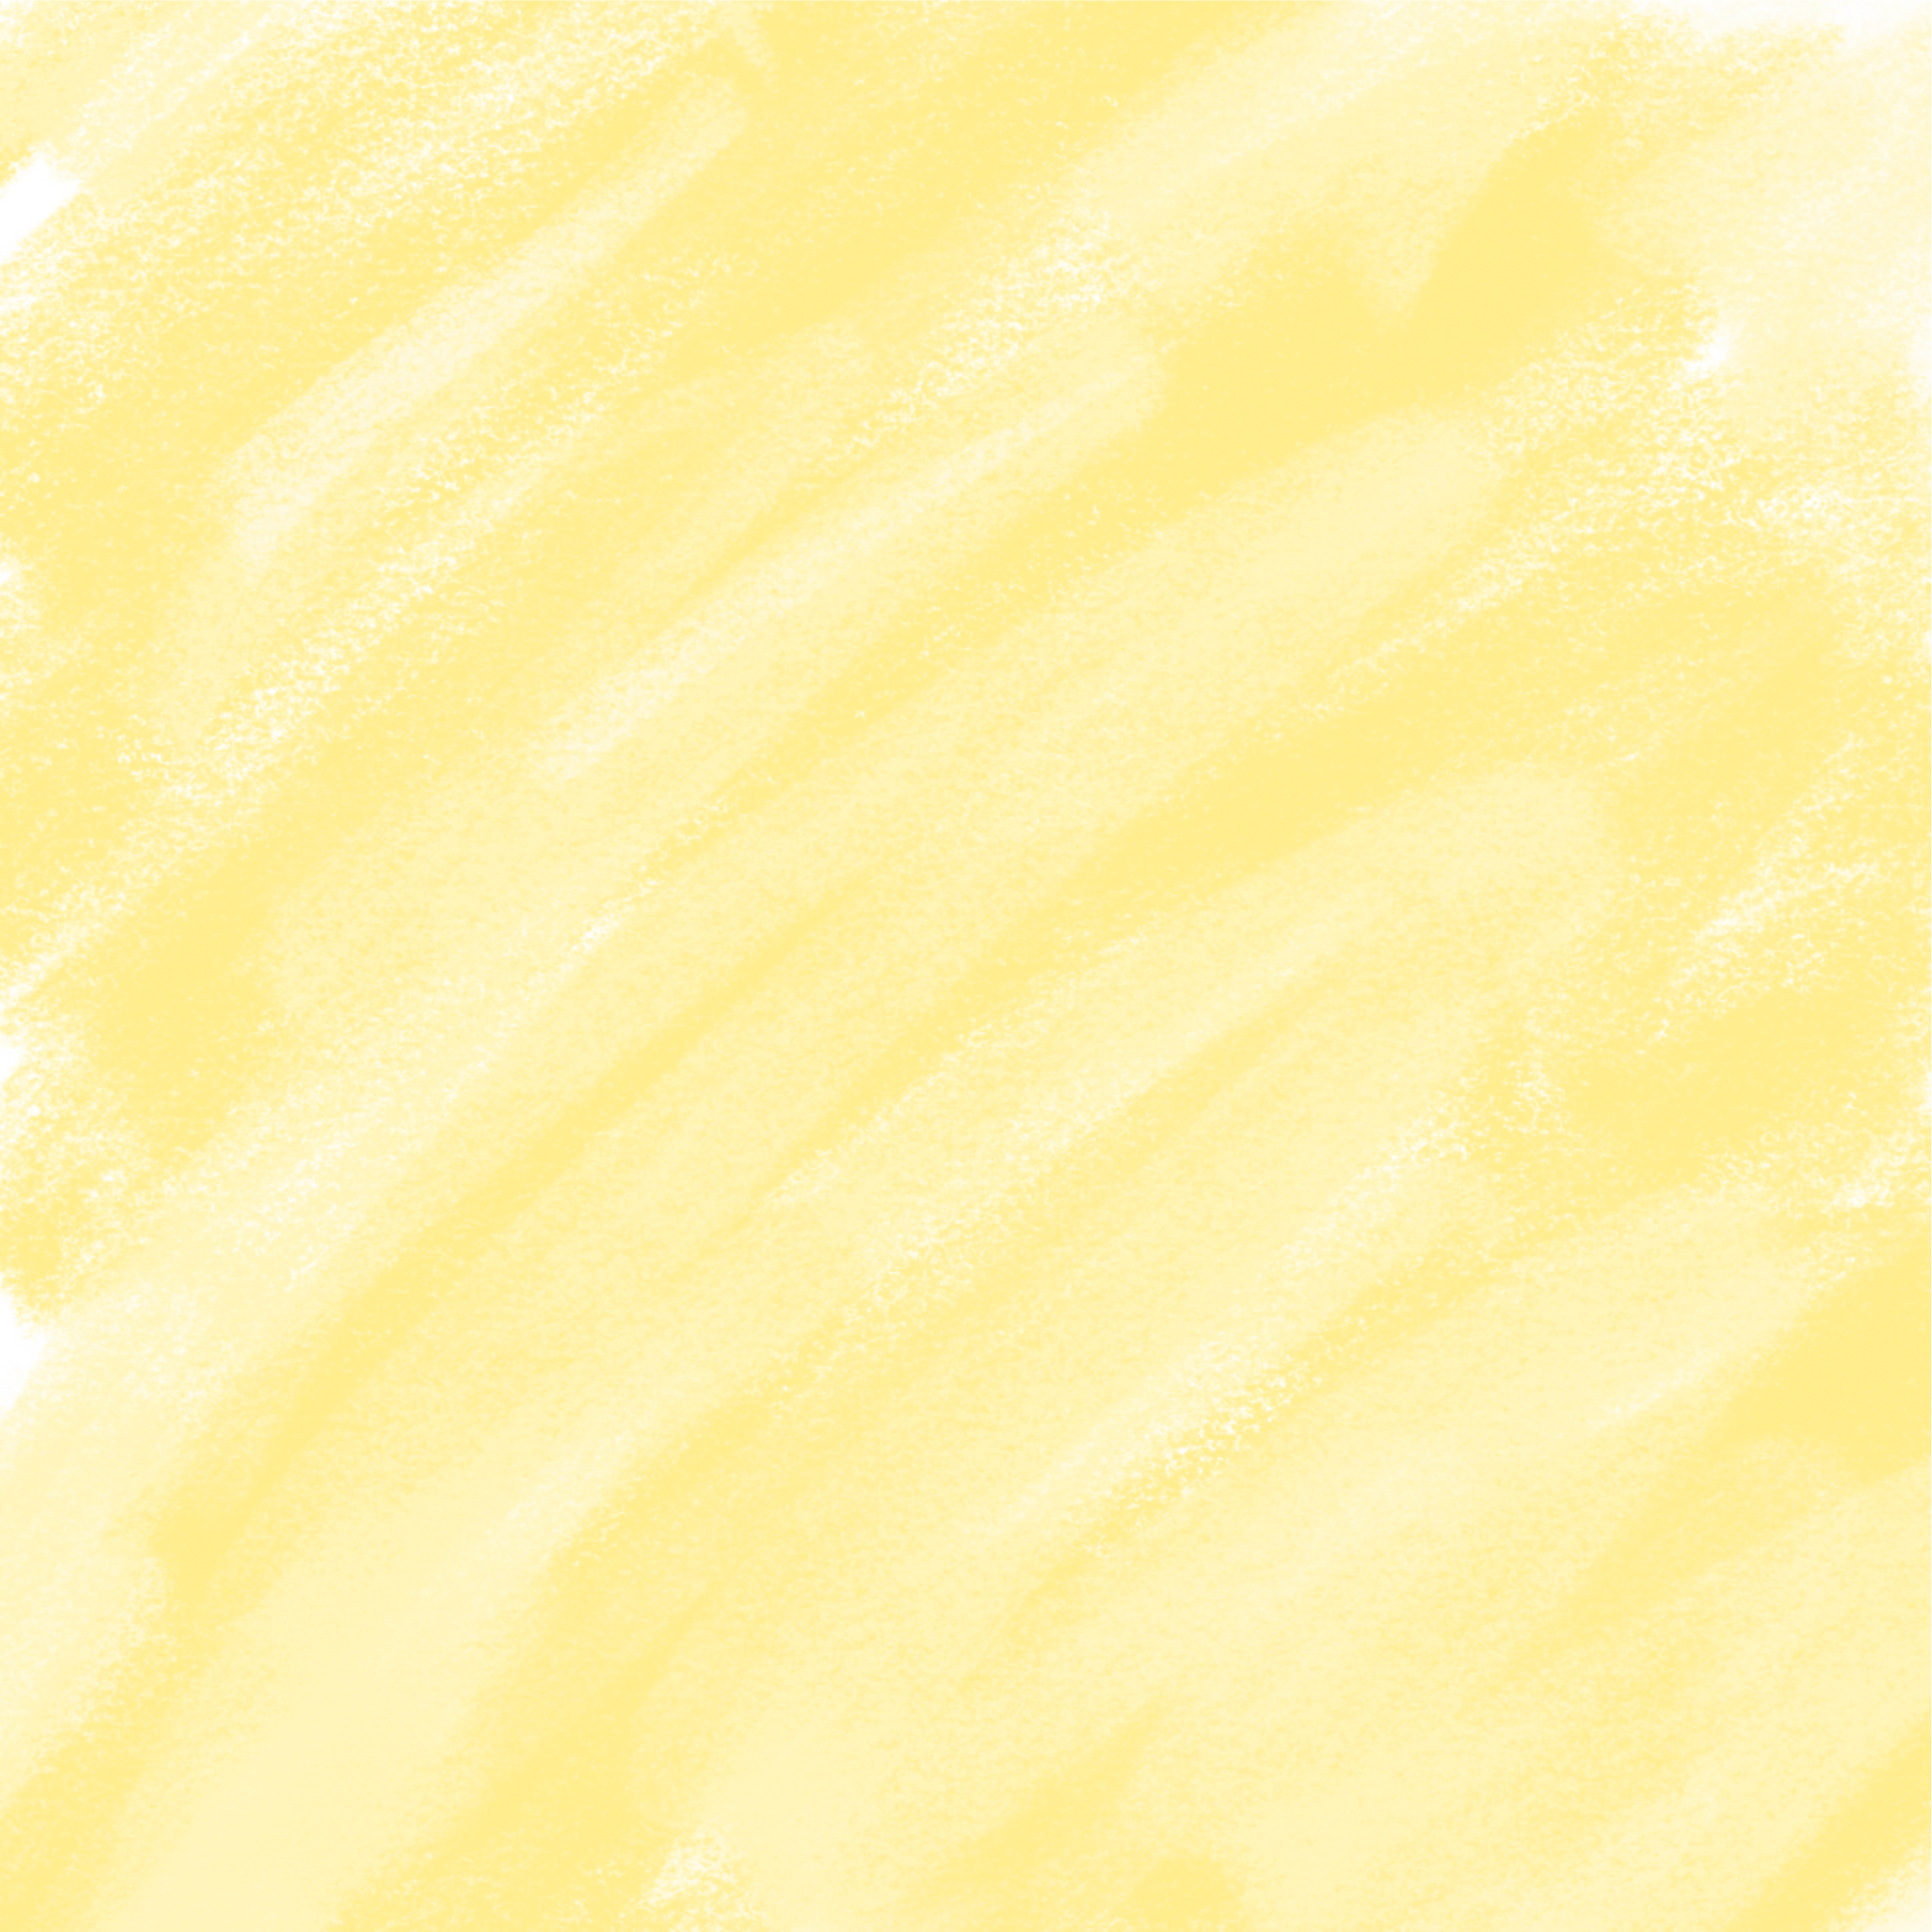 Background texture yellow